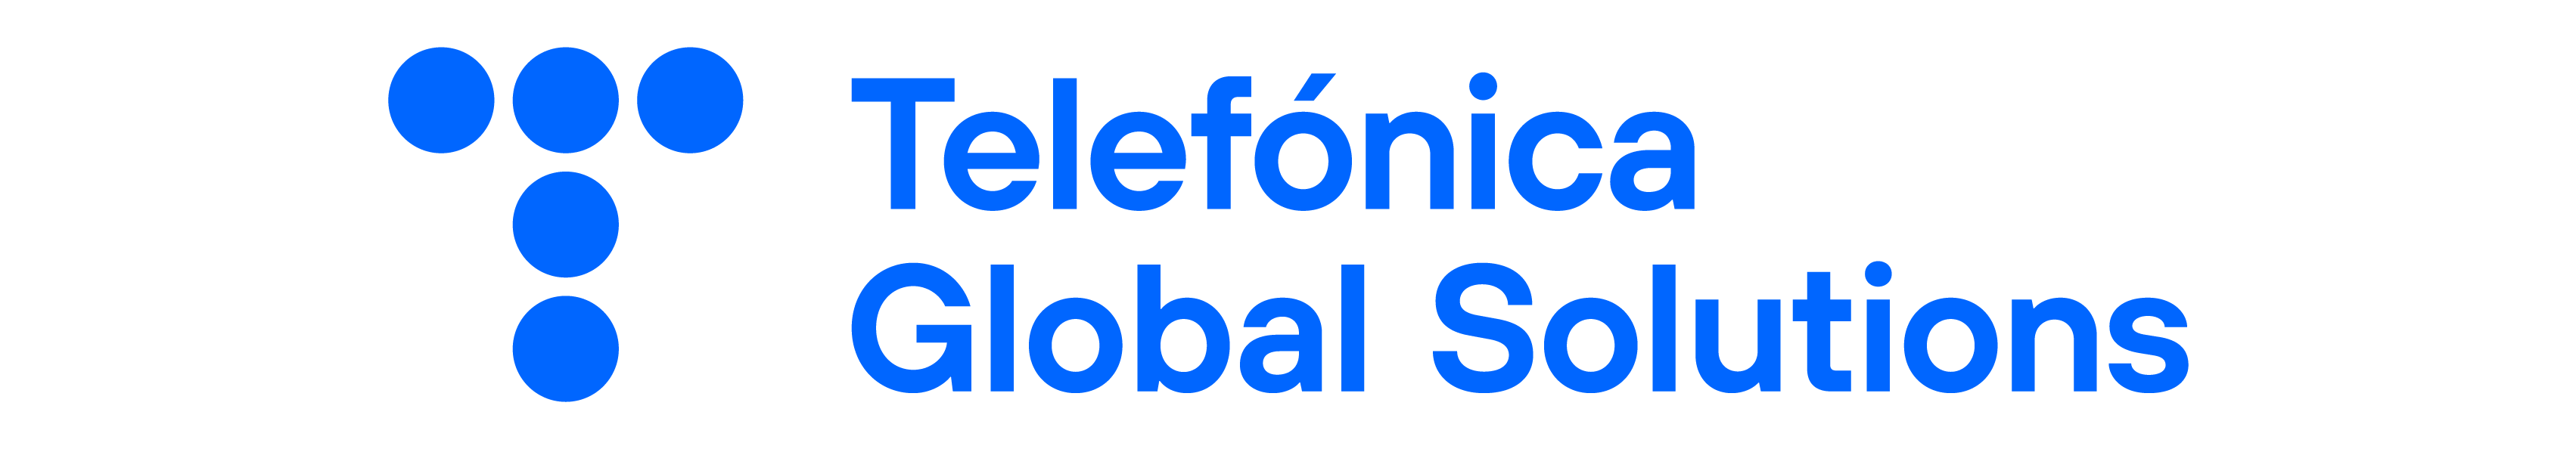 Telefonica Global Solutions-min